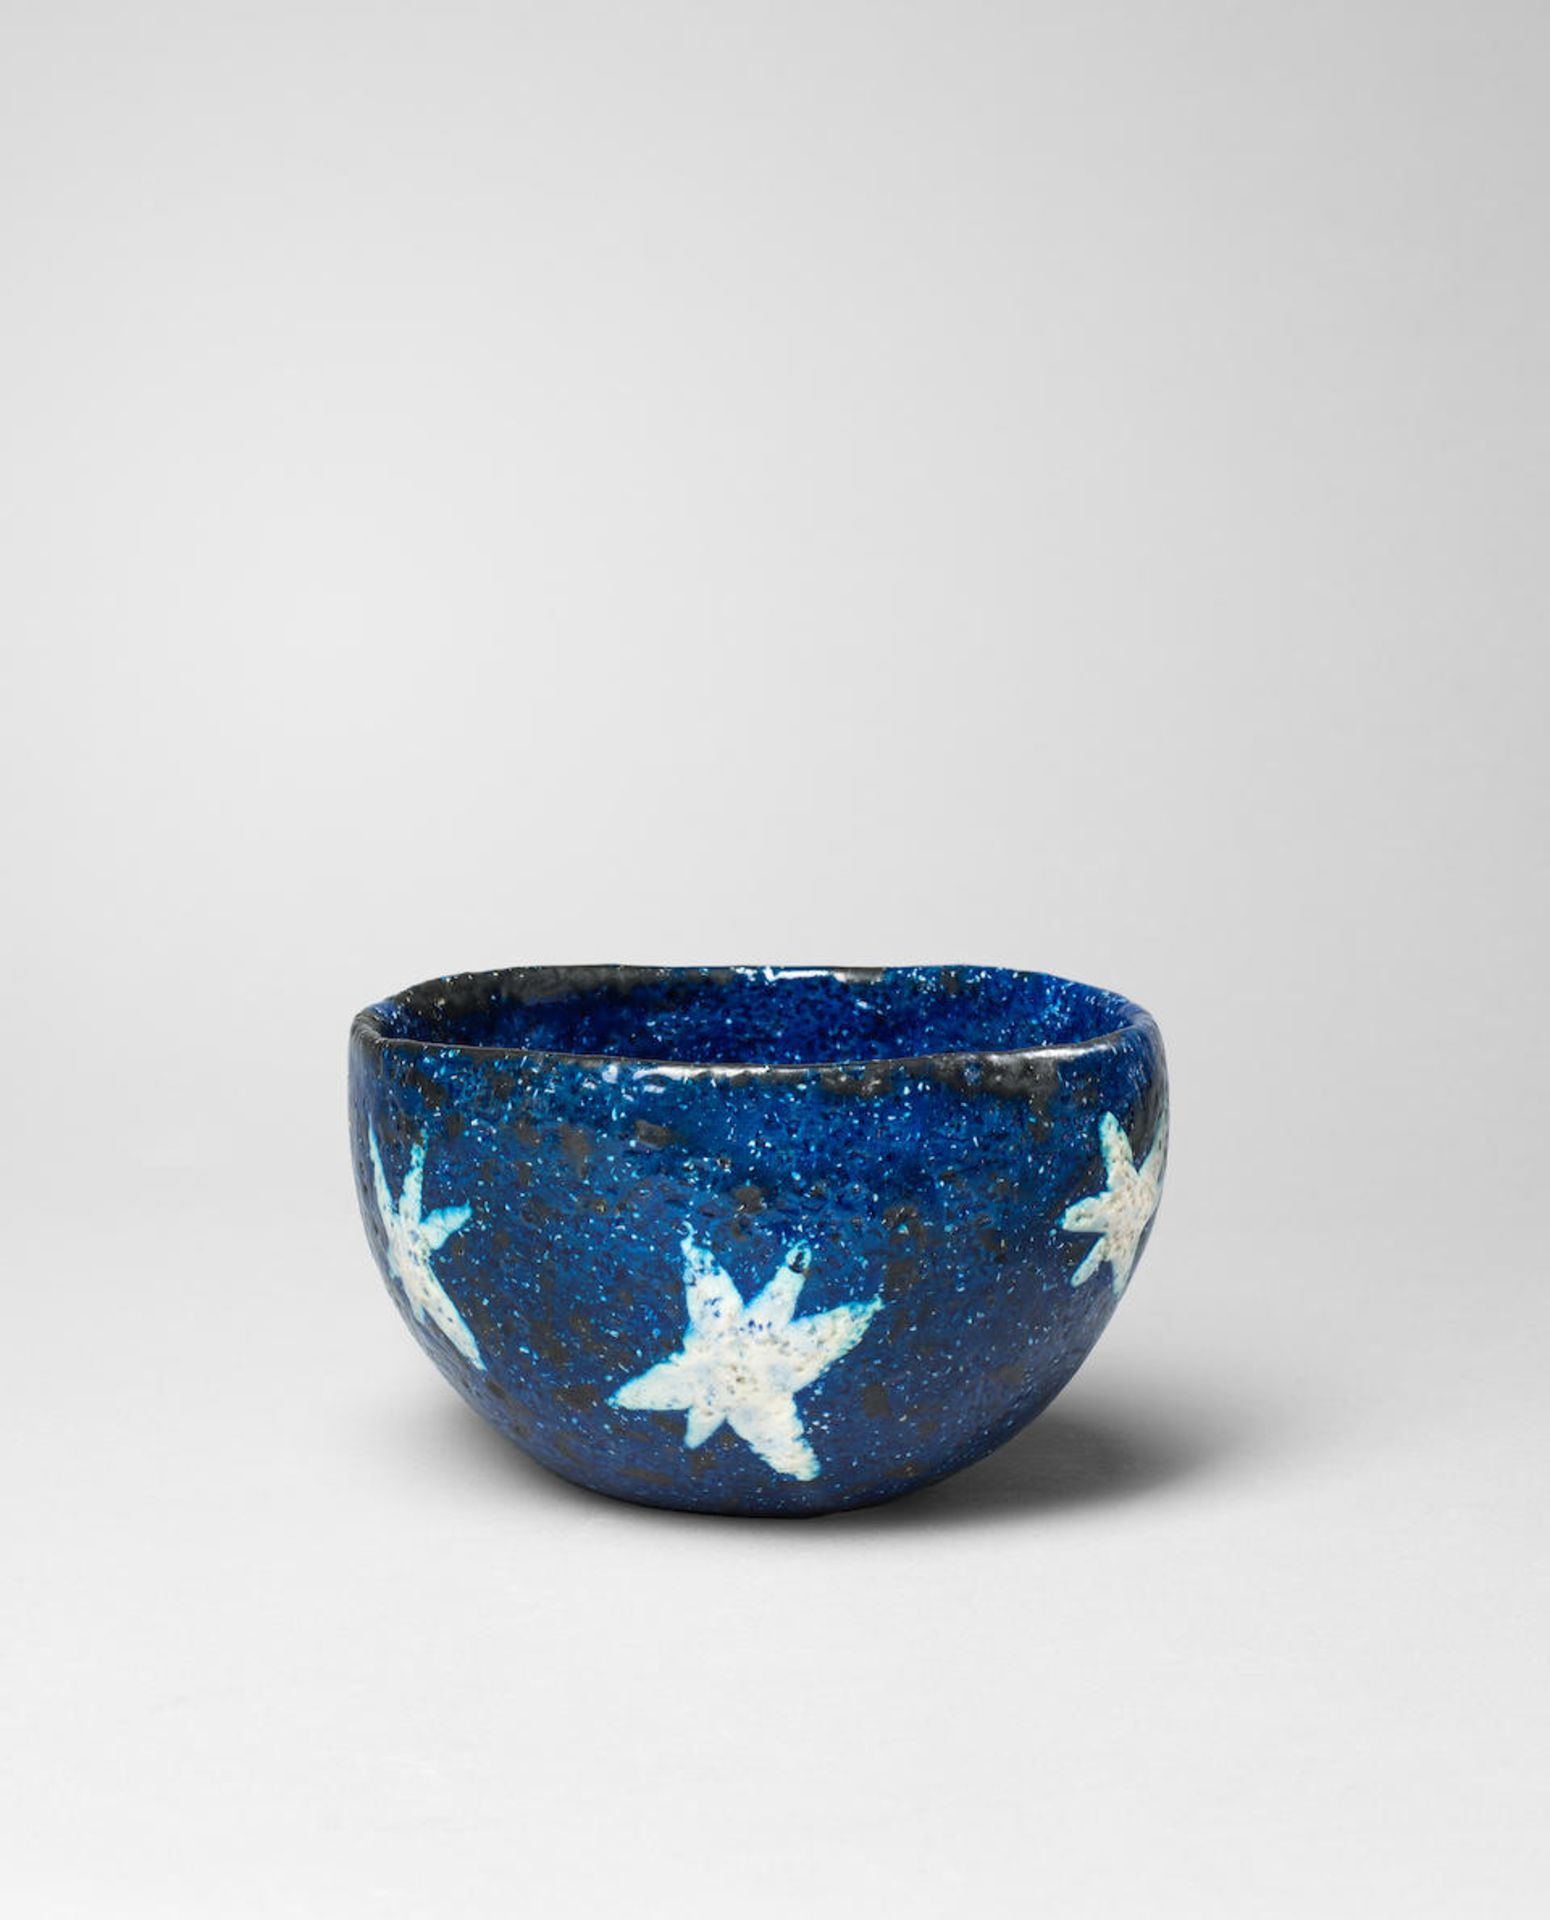 Jane Waller Small bowl, 1985